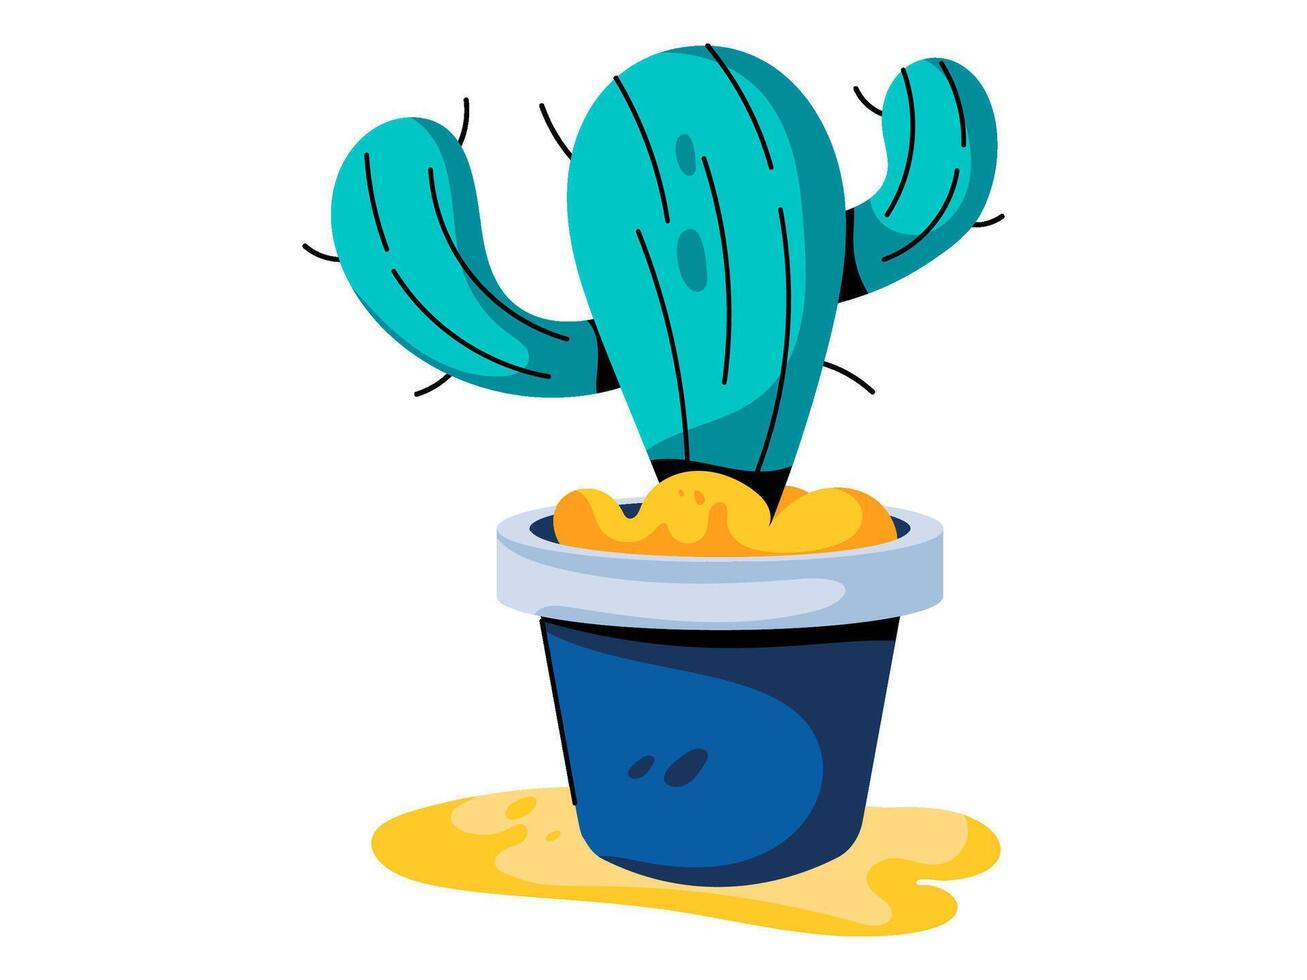 cactus diseño con moderno ilustración concepto estilo para Insignia granja agricultura pegatina ilustración vector